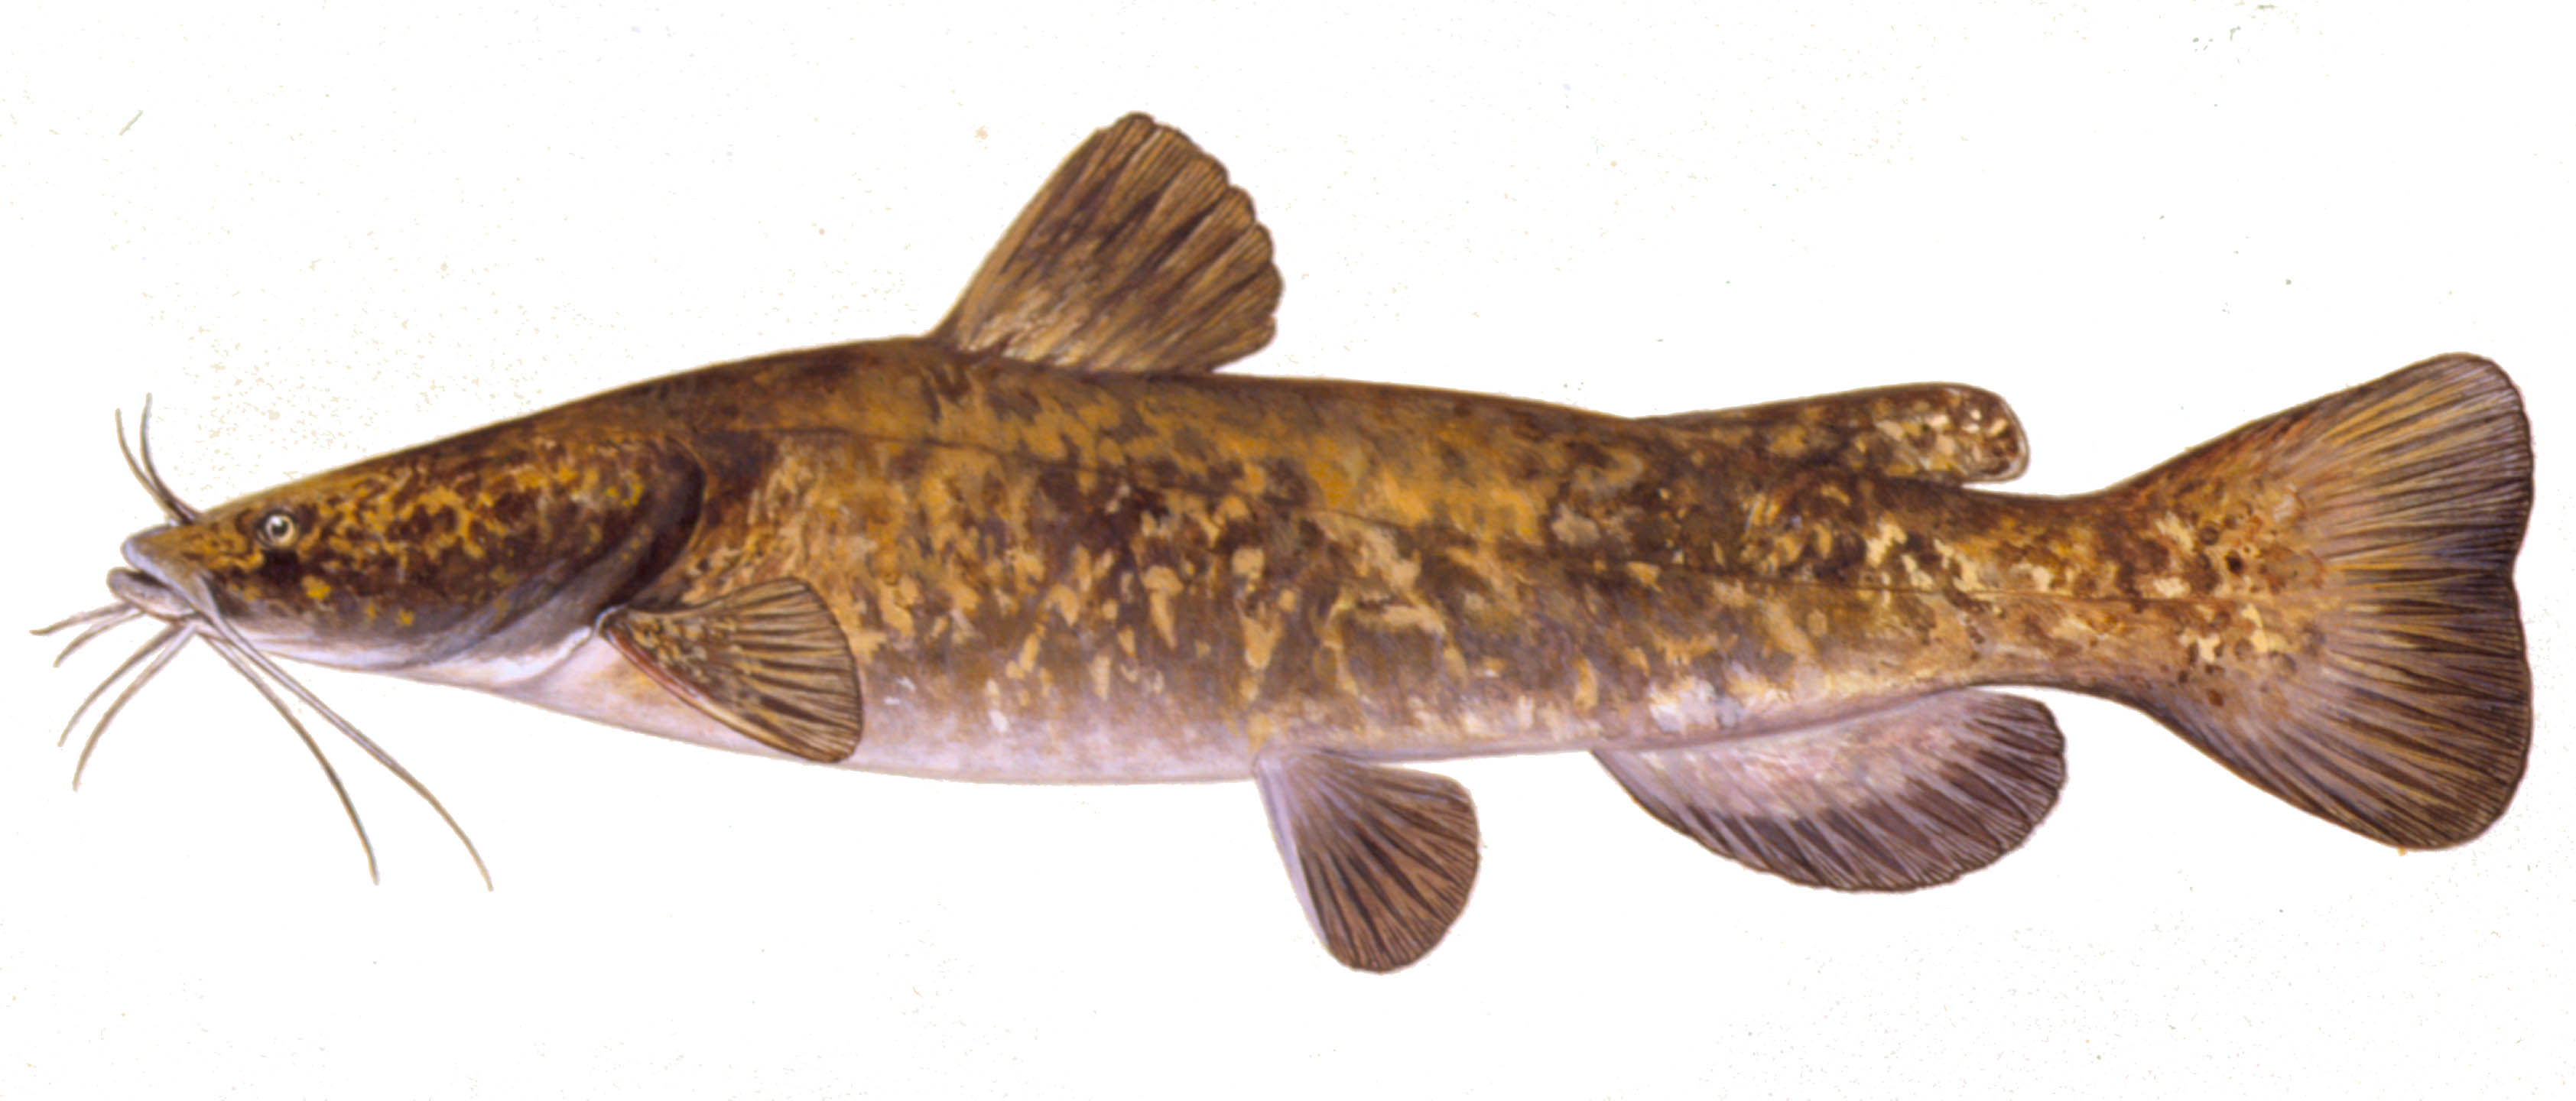 Flathead Catfish, illustration by Maynard Reece, from Iowa Fish and Fishing.